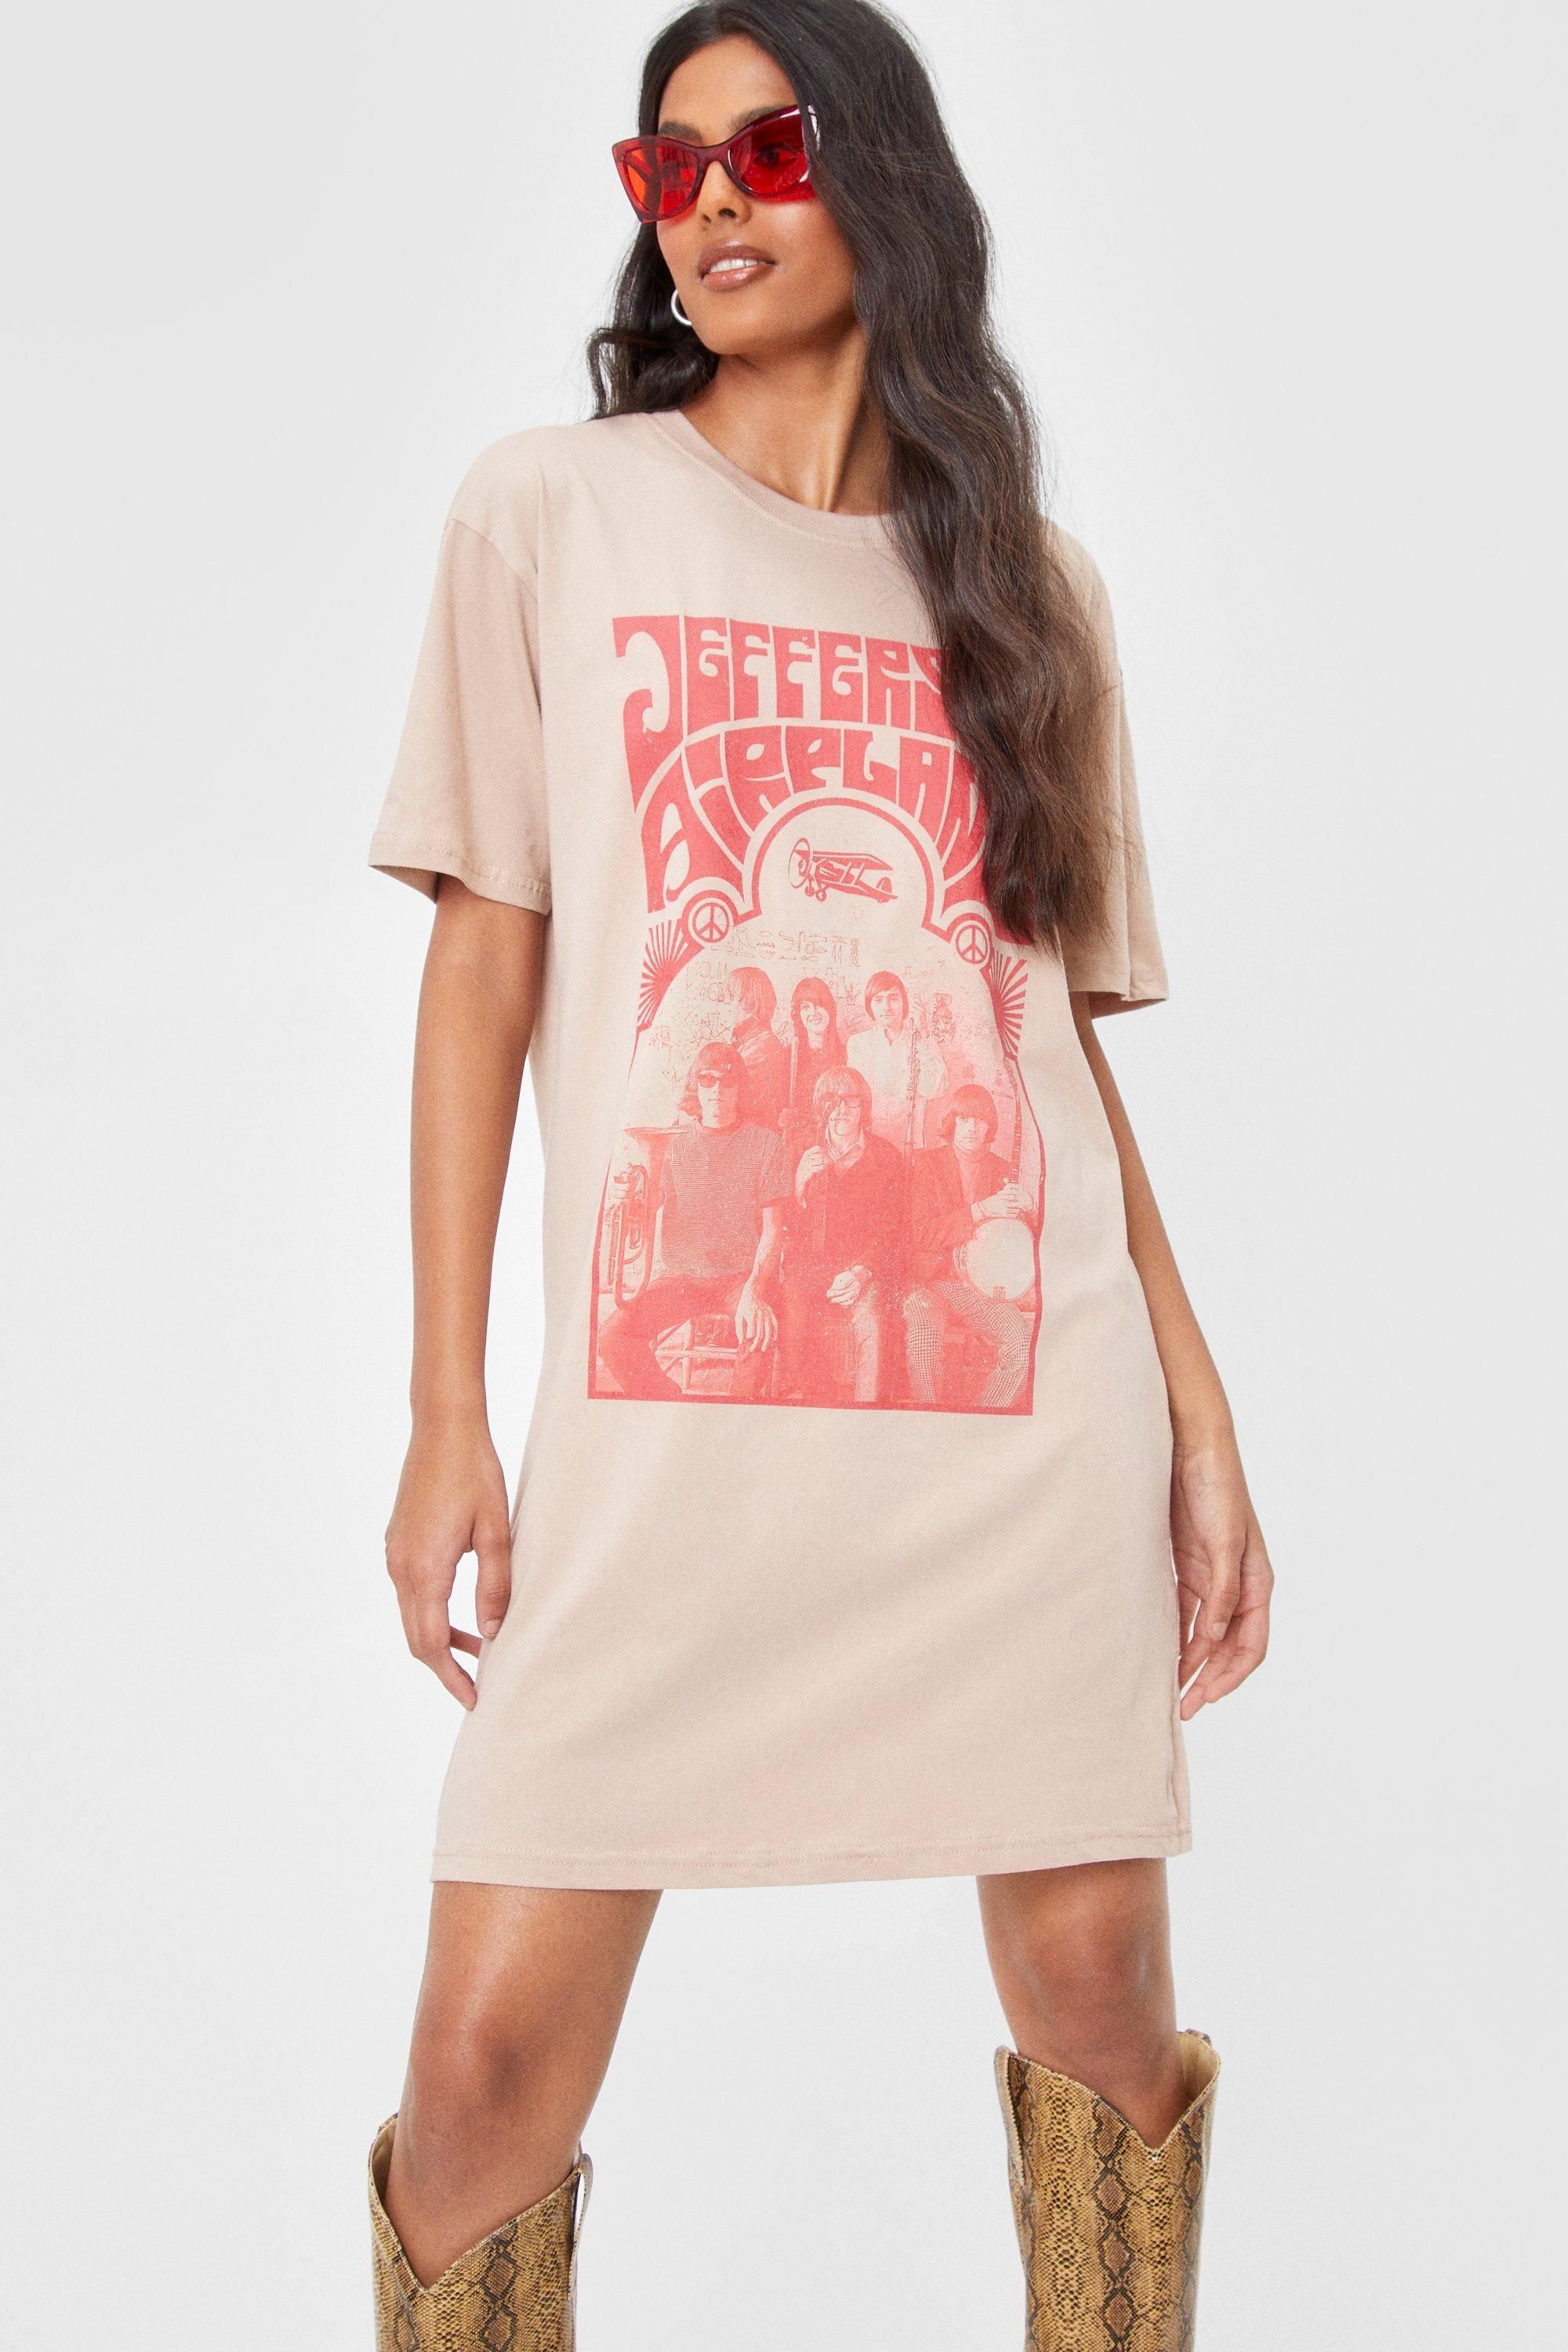 Jefferson Airplane Graphic T-Shirt Dress | Nasty Gal (US)